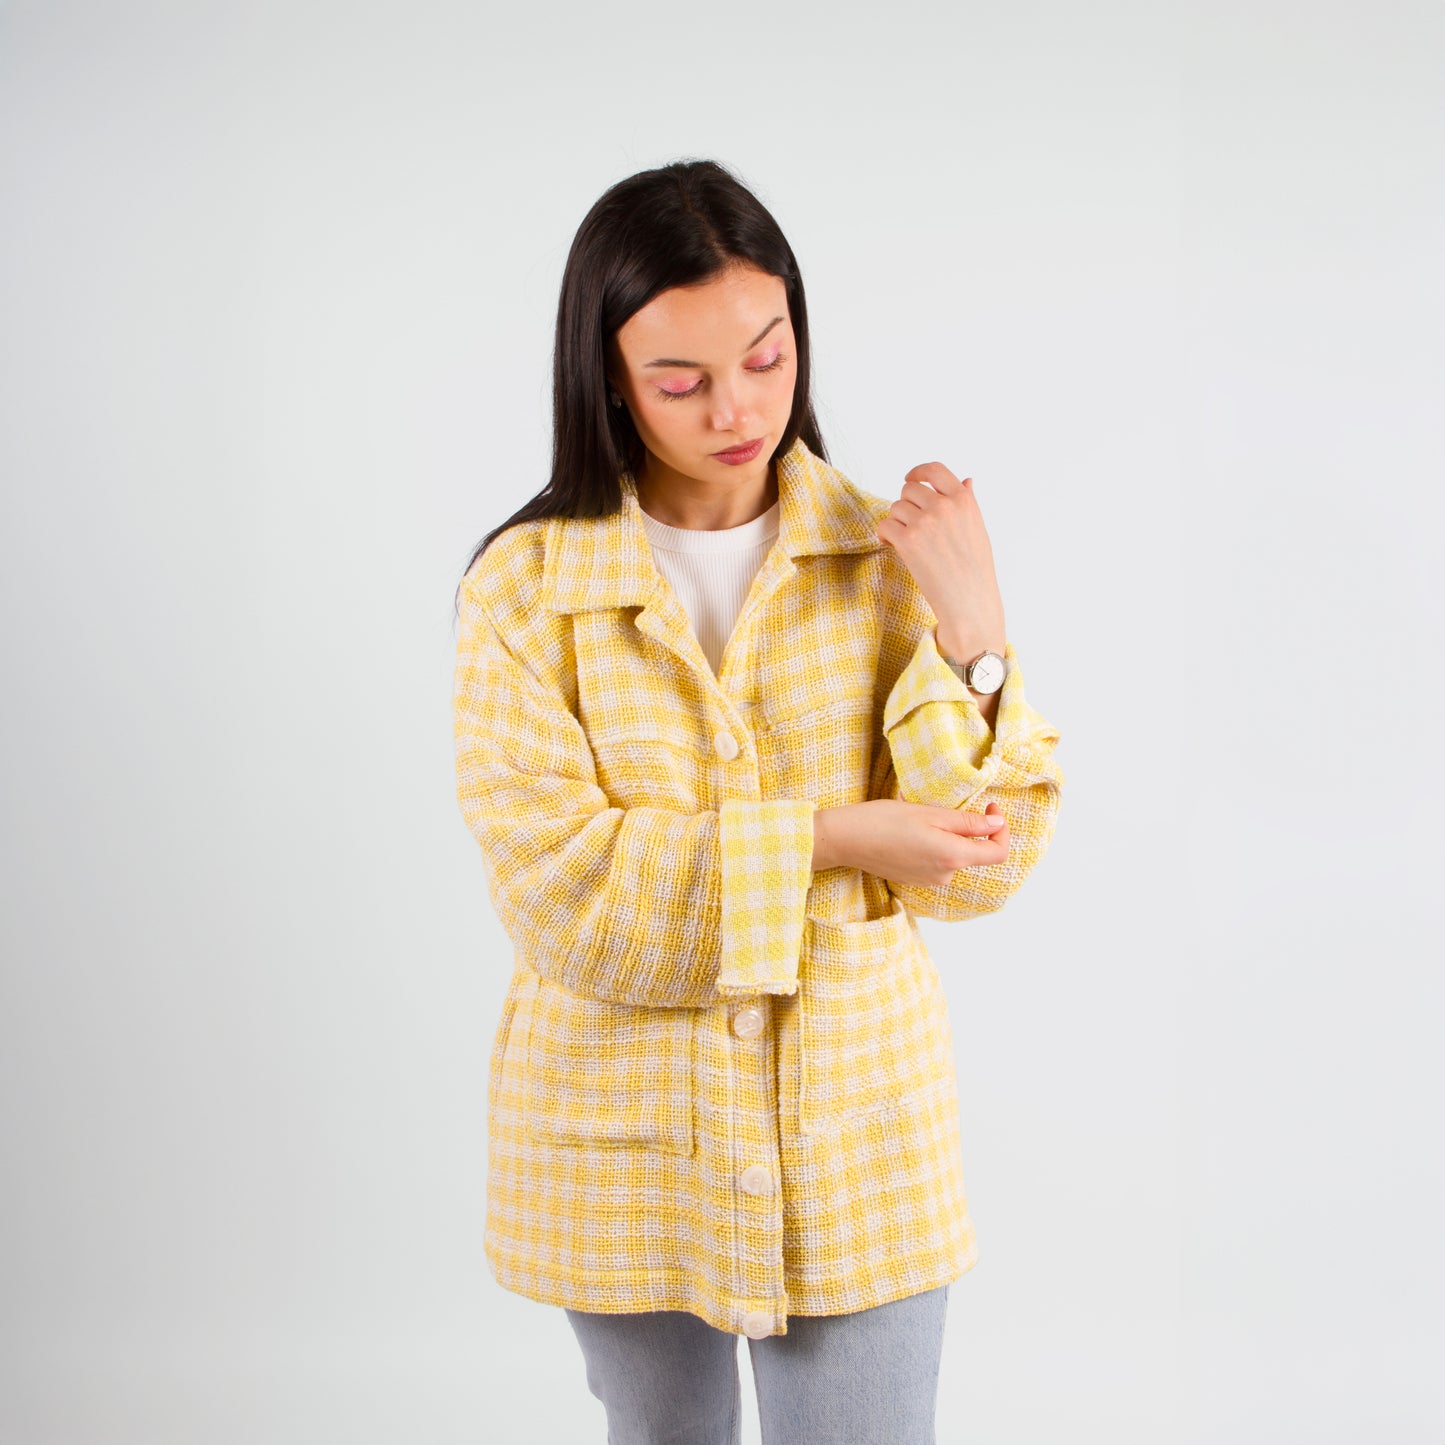 lucewear: femme portant une veste jaune à carreau